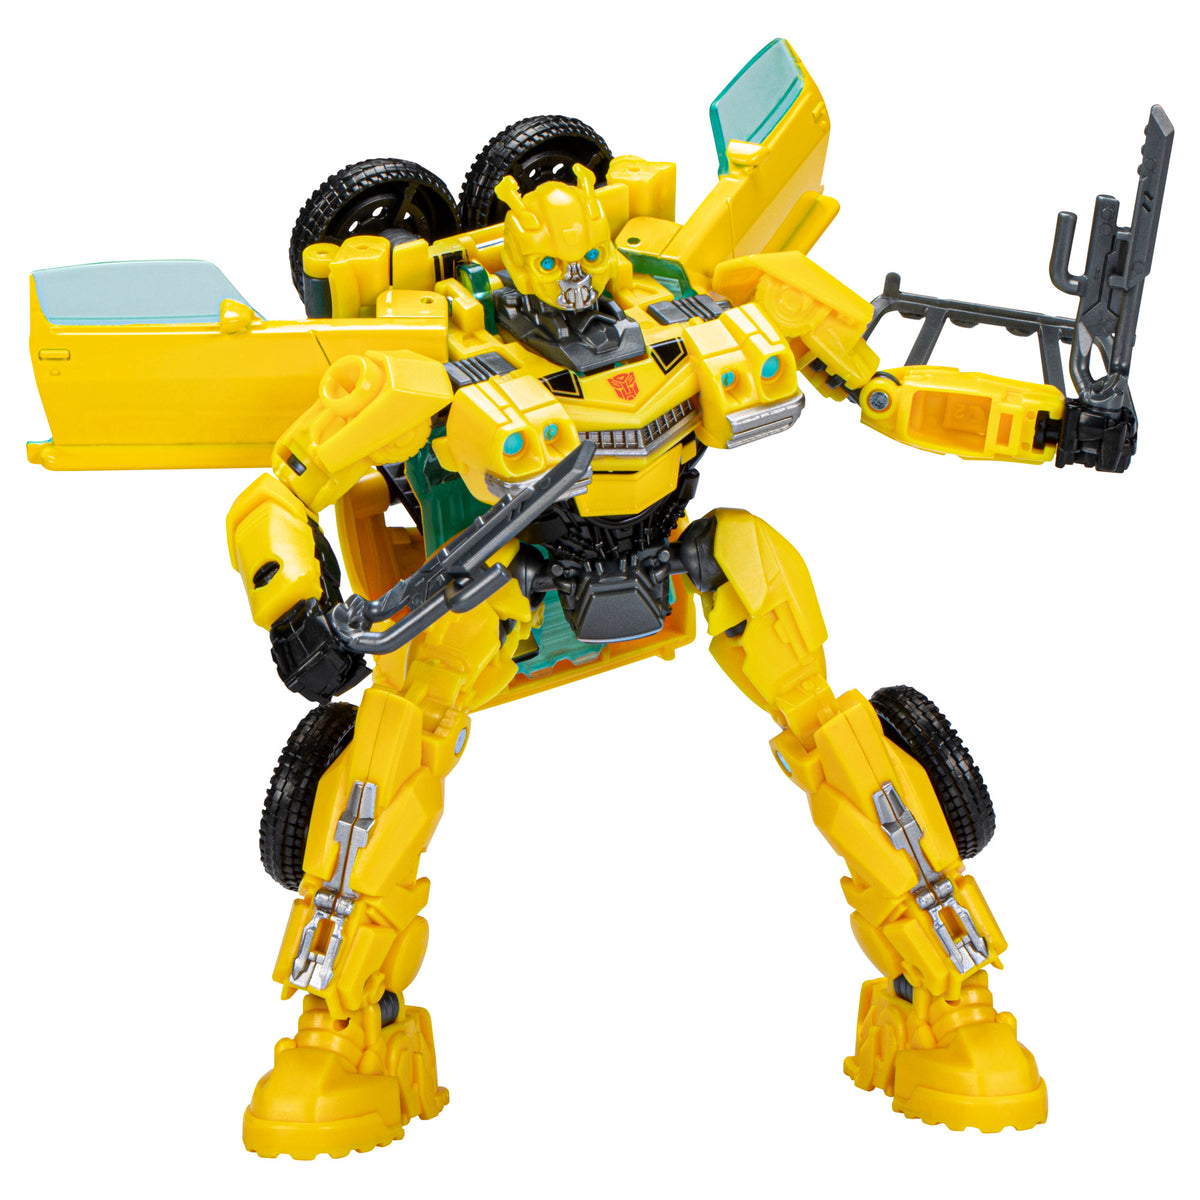 Transformers Legacy Evolution Core Class Optimus Prime & Bumblebee – Hasbro  Pulse